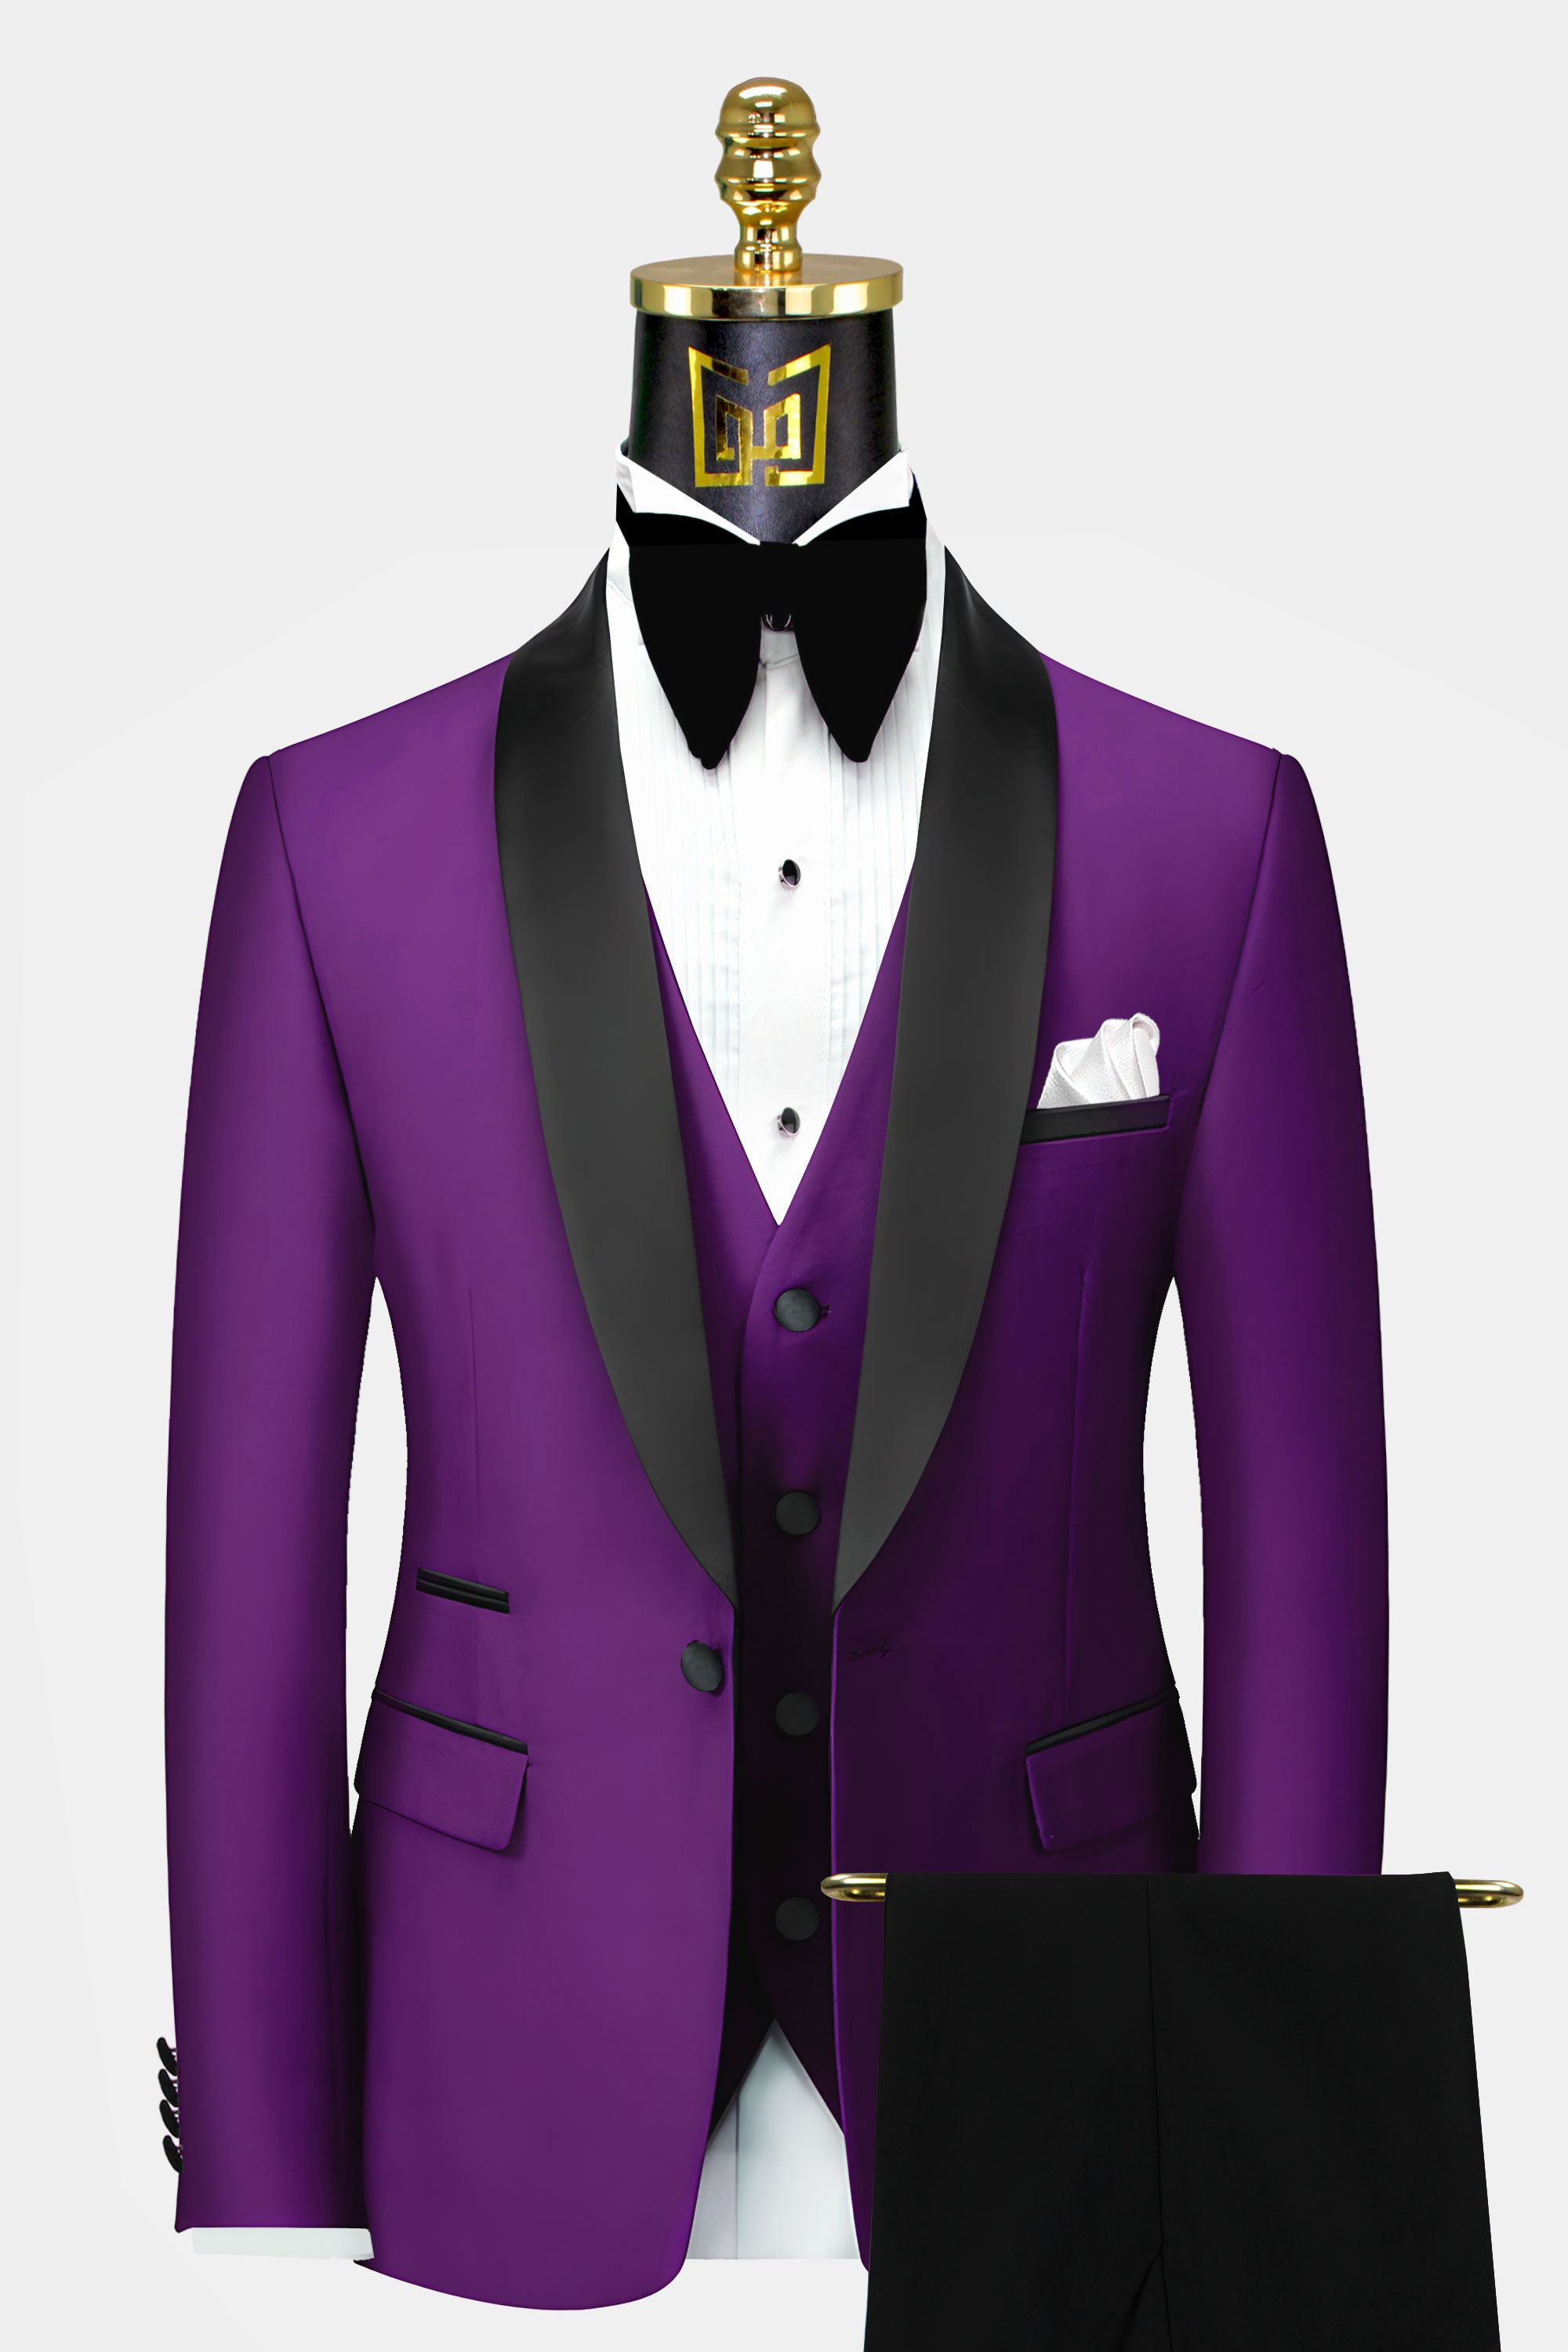 Purple-and-Black-Tuxedo-Groom-Wedding-Prom-Suit-from-Gentlermansguru.com